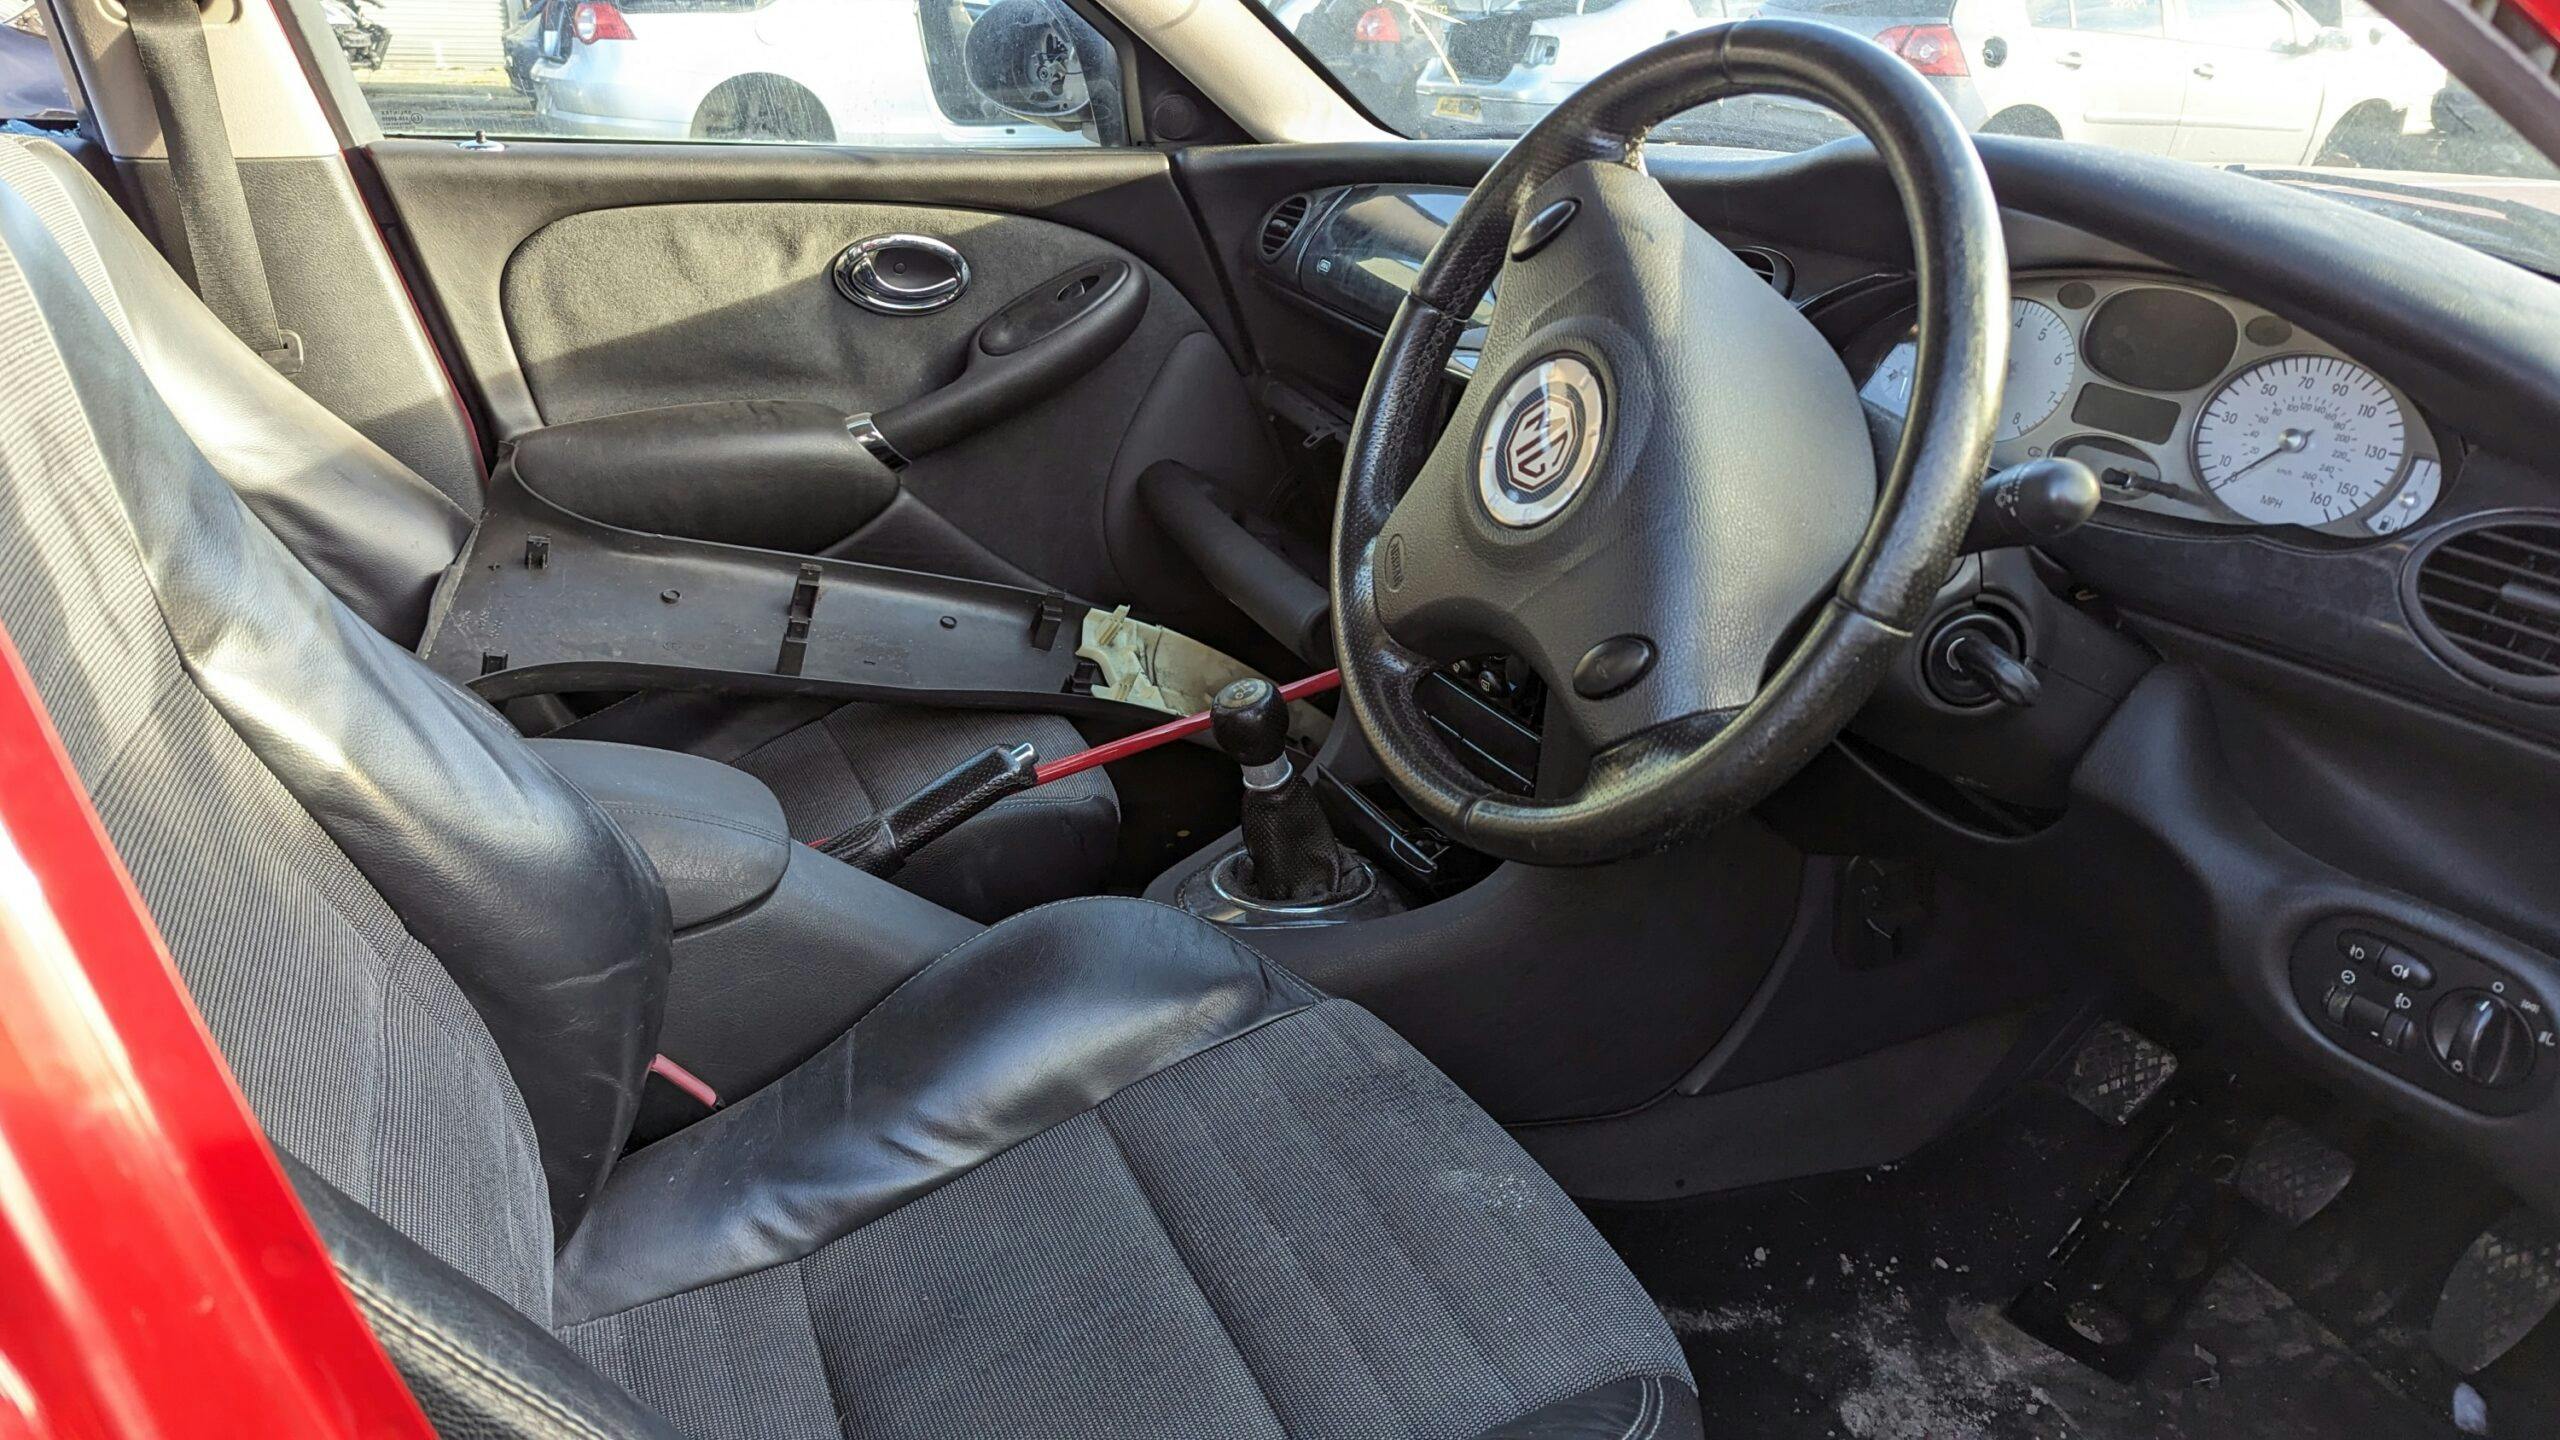 2005 MG ZT 190 interior